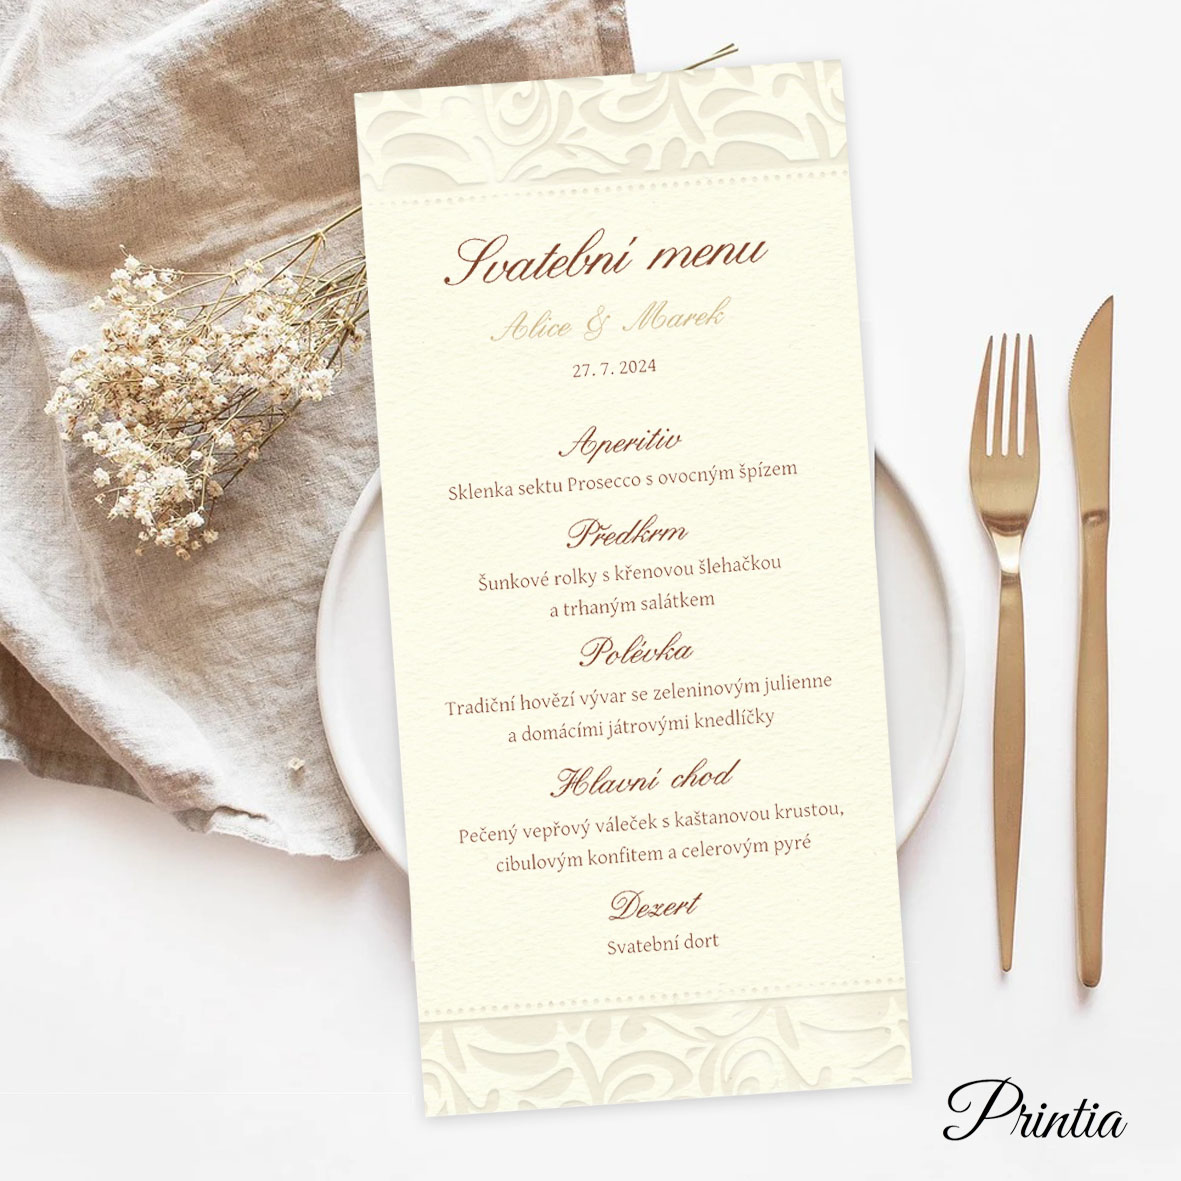 Creamy wedding menu